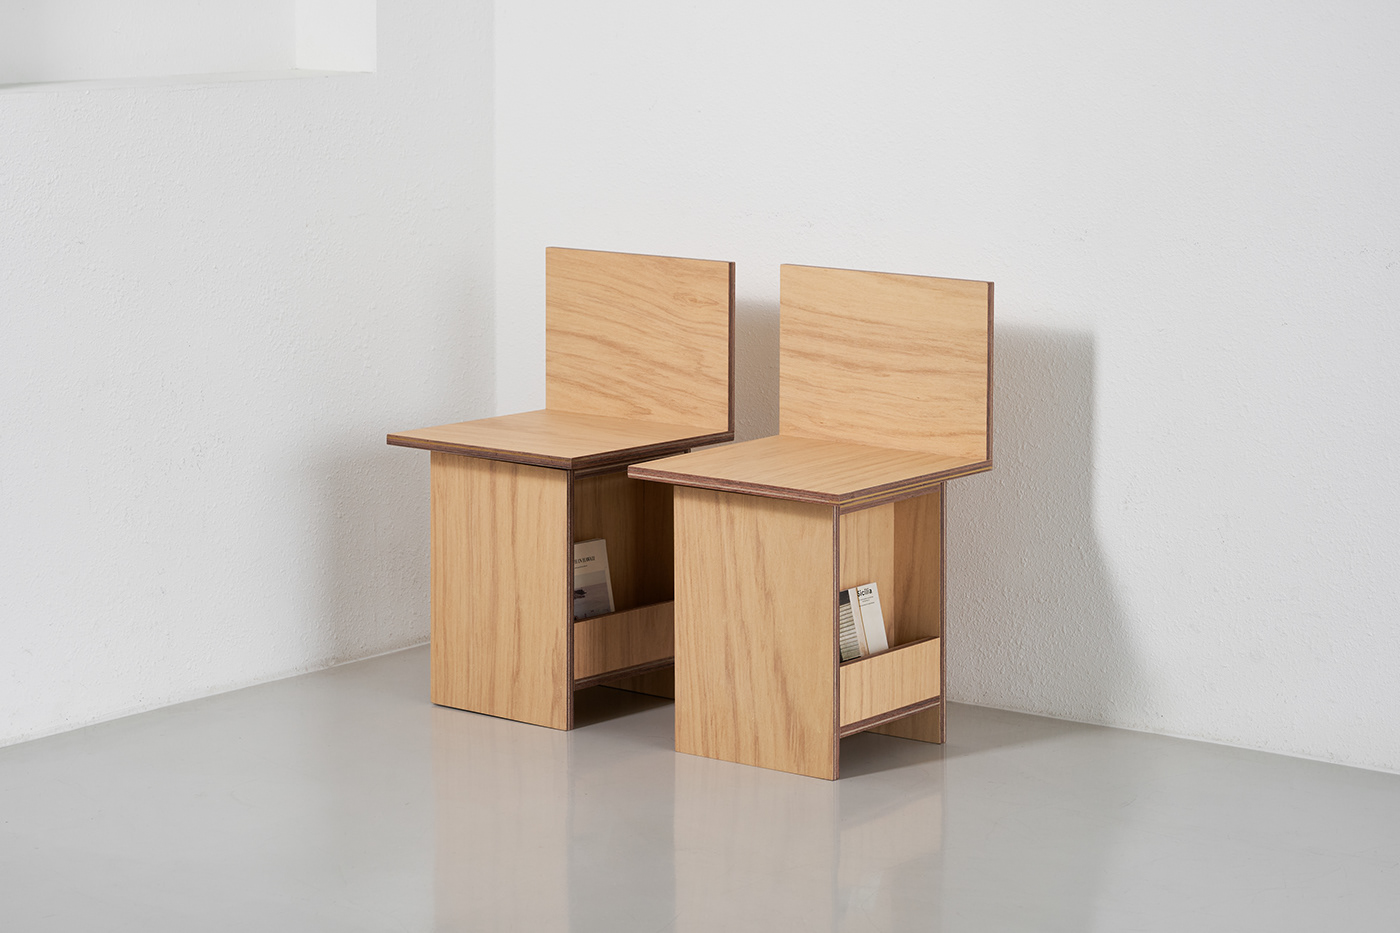 furniture chair stool furniture design  industrial design  productdesign industrial wood woodworking